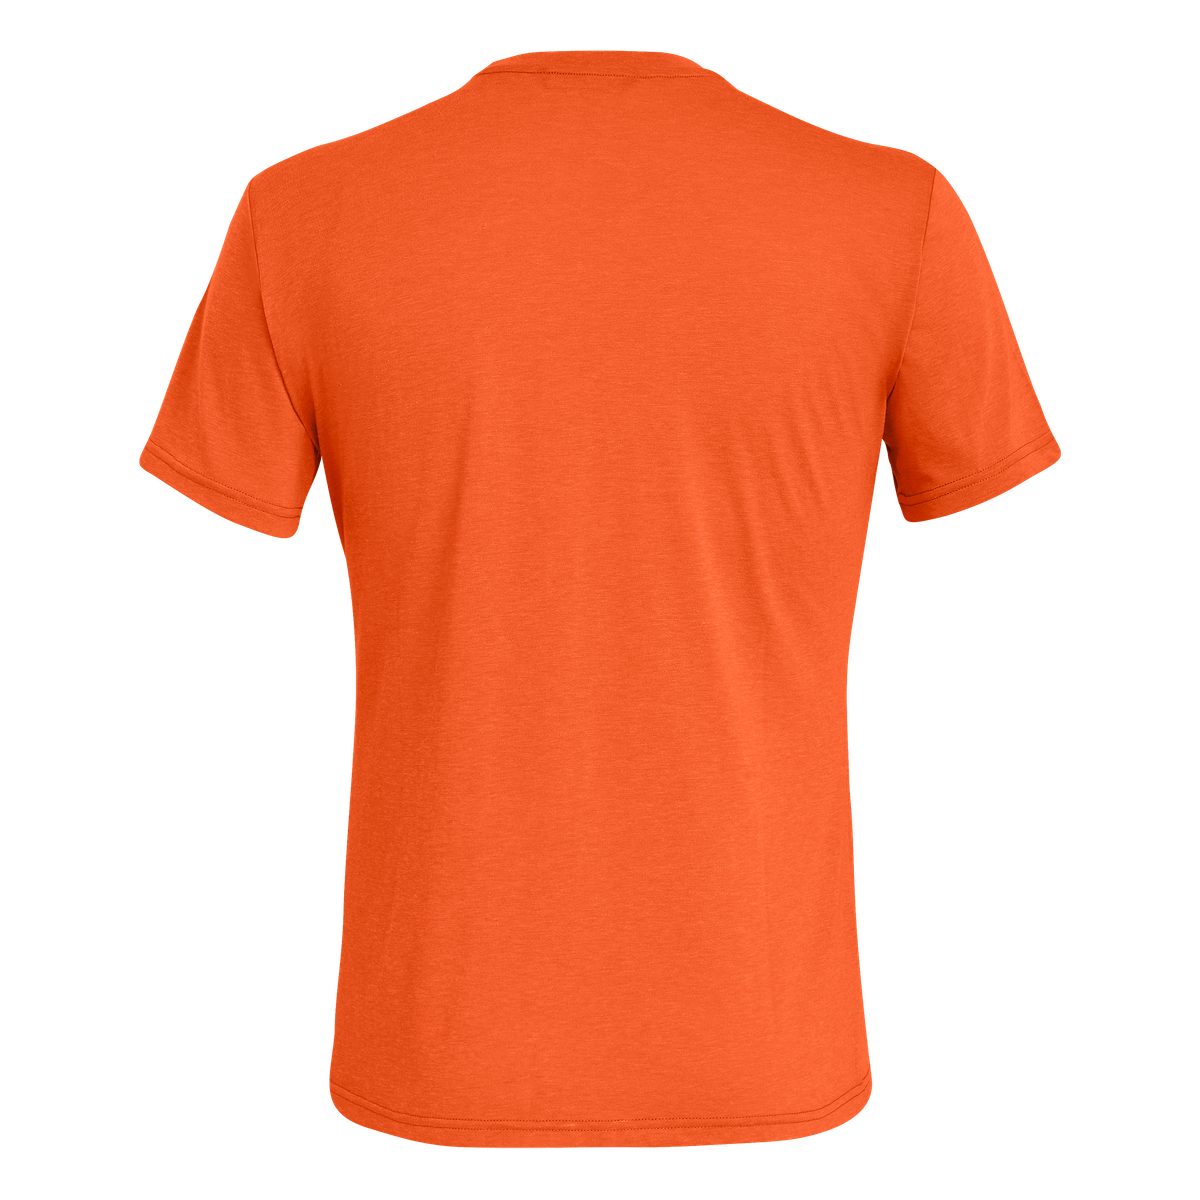 4156 - (Funktionsshirt) T-Shirt T-Shirt Salewa orange Salewa Herren Dri-Release® Solidlogo red